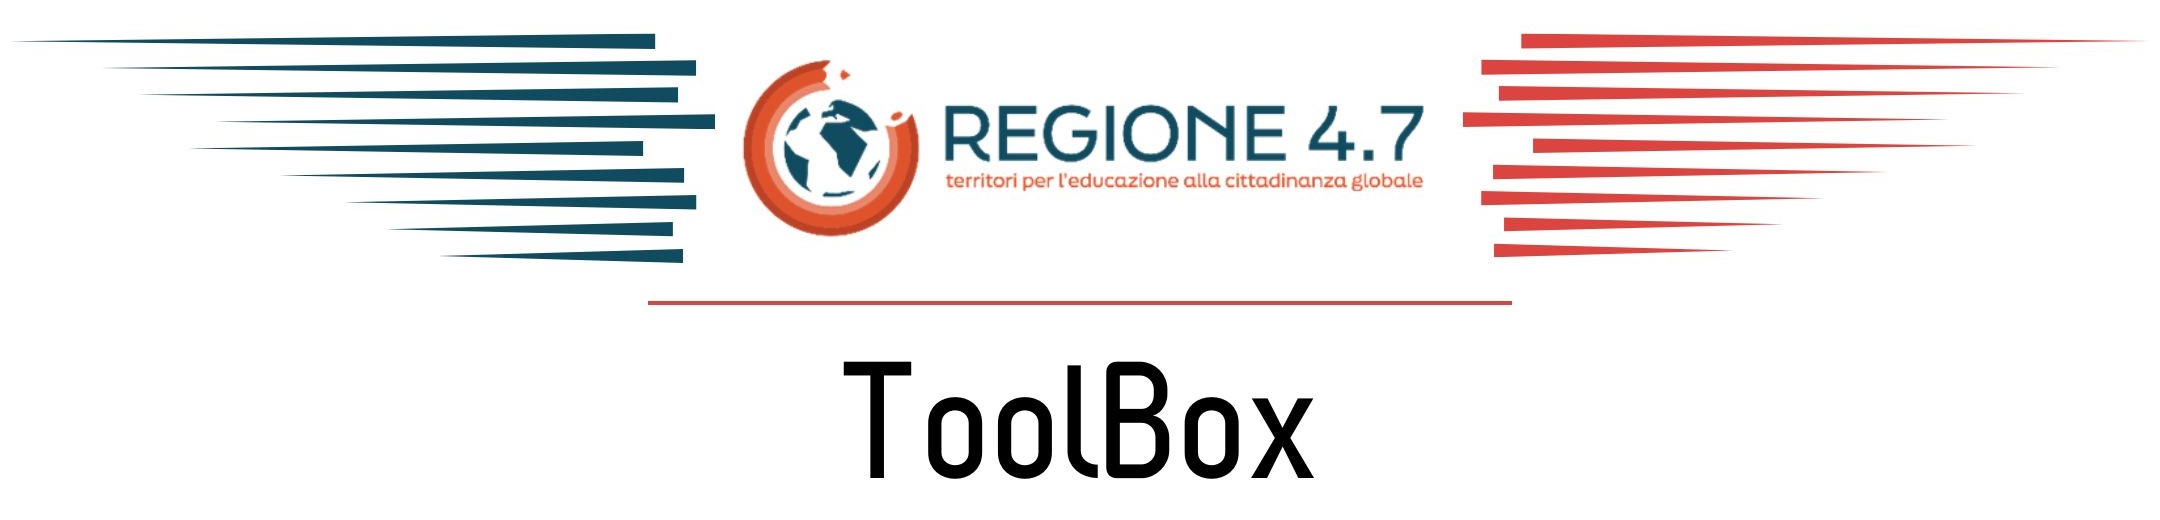 ToolBox Regione 4.7 - 1